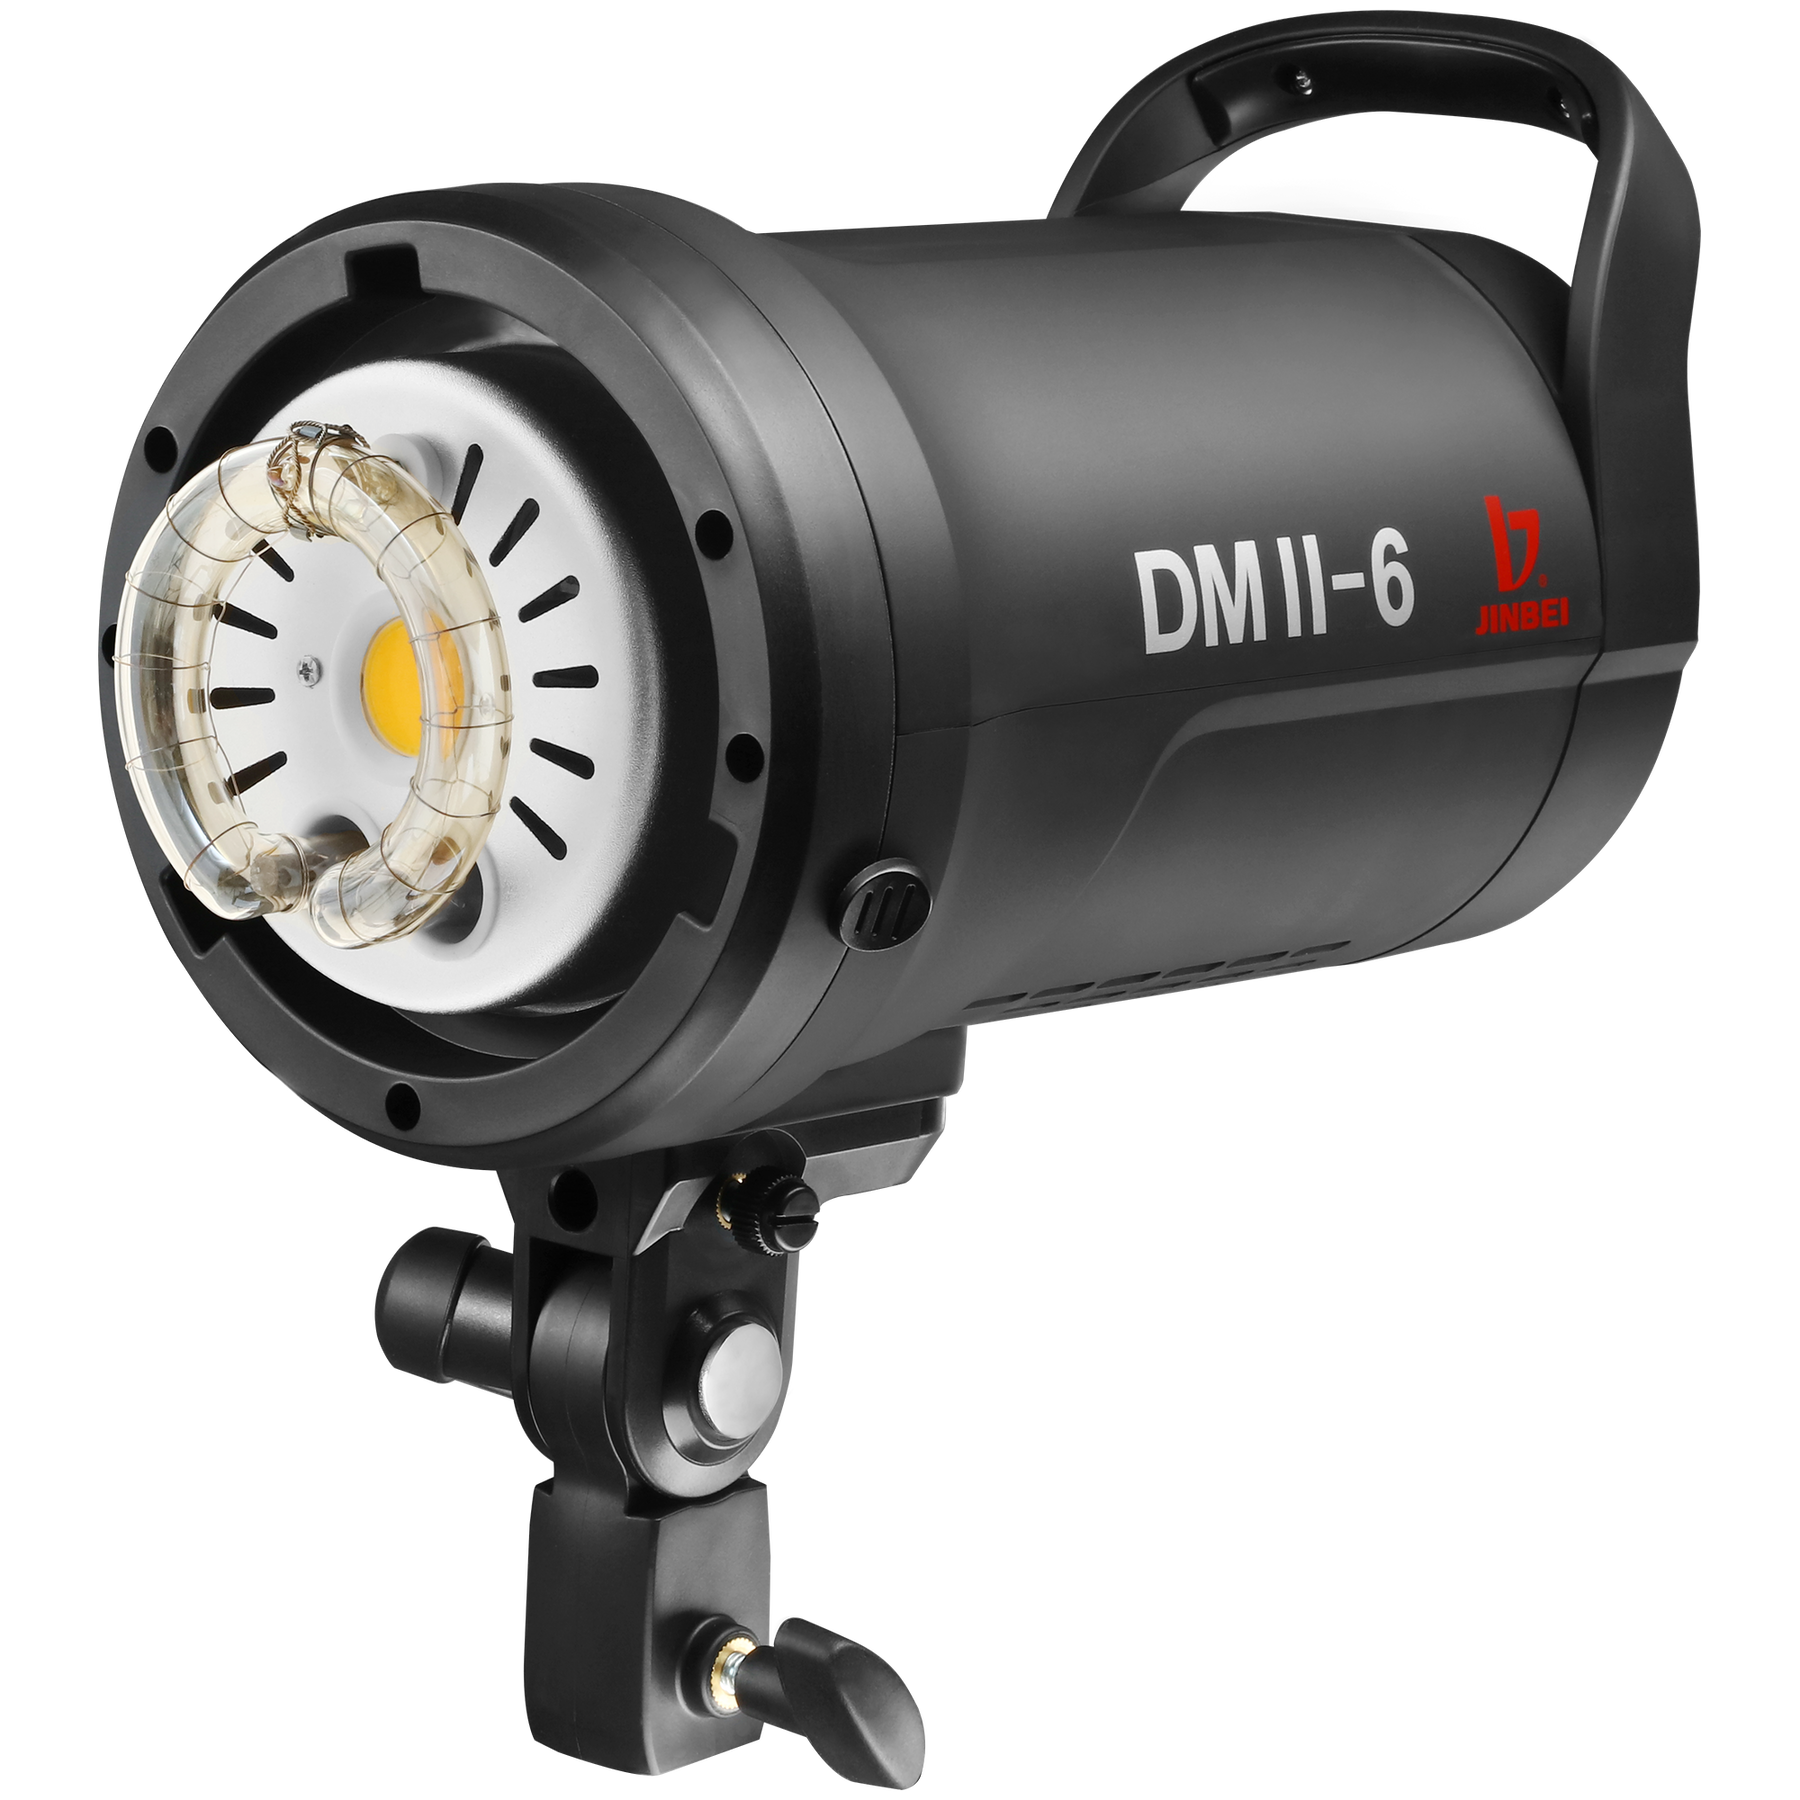 DMII-6 studio flash